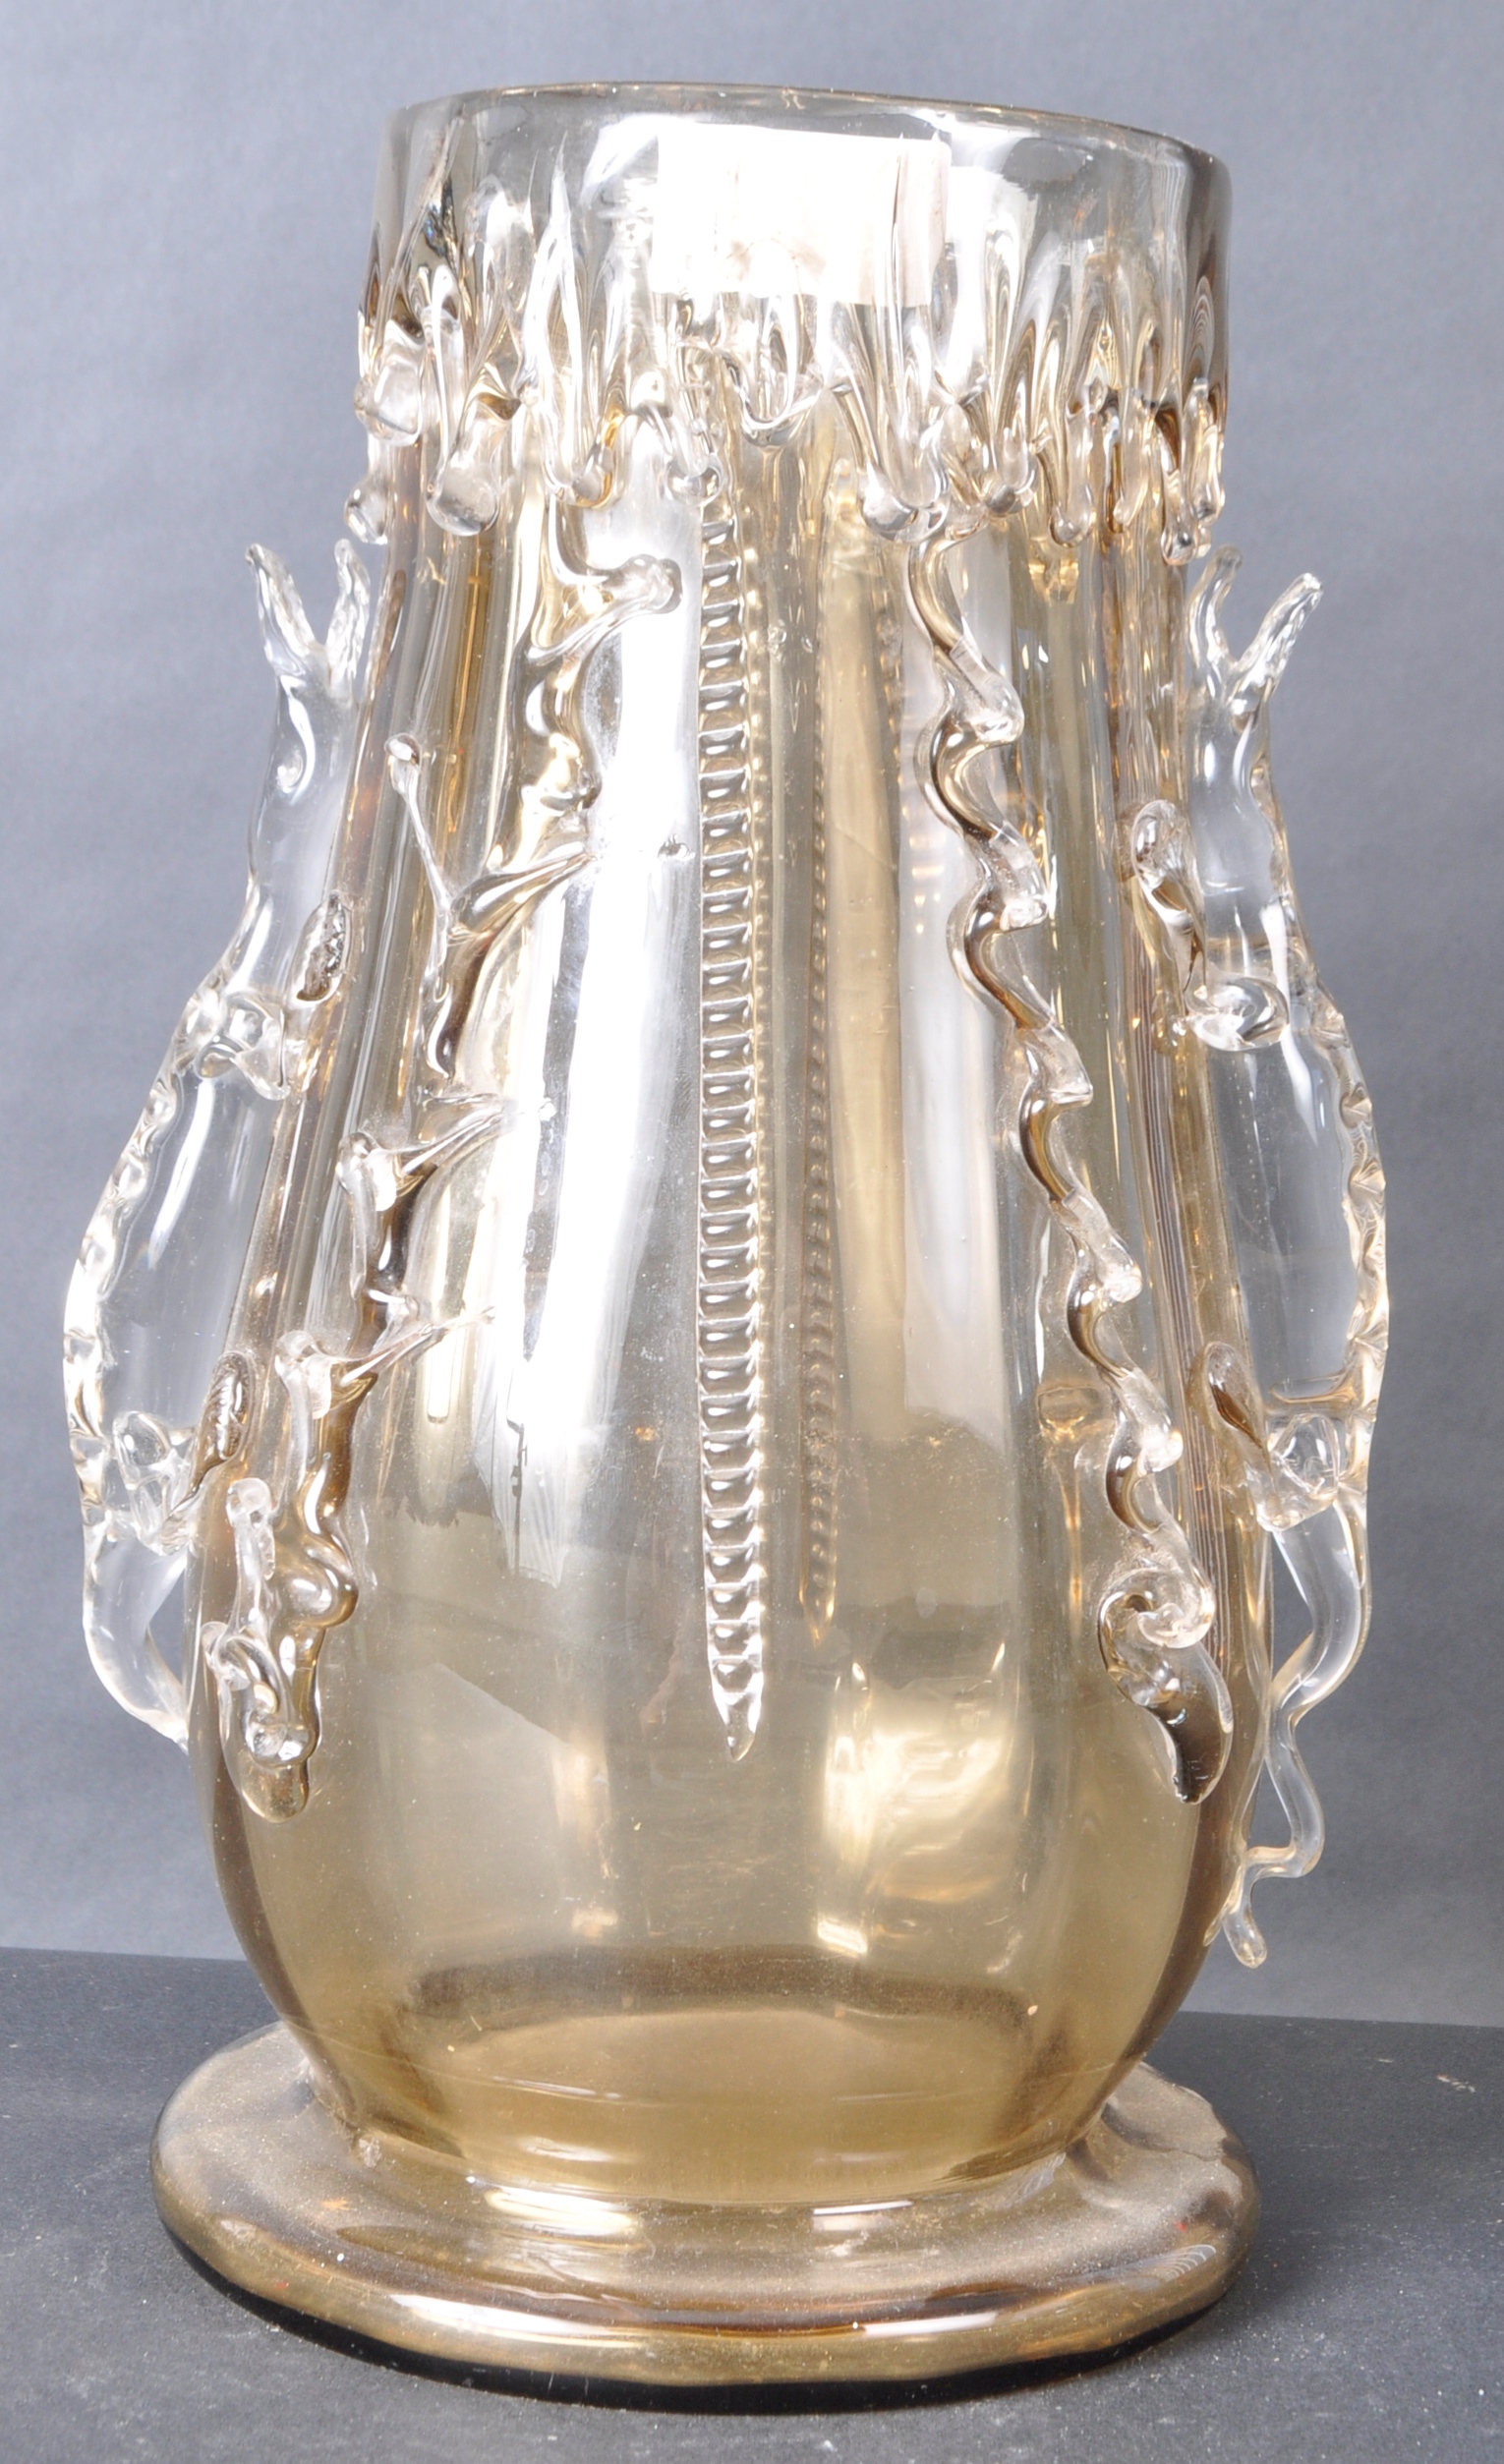 EARLY 20TH CENTURY MOSER SALAMANDER ART GLASS VASE - Image 4 of 4